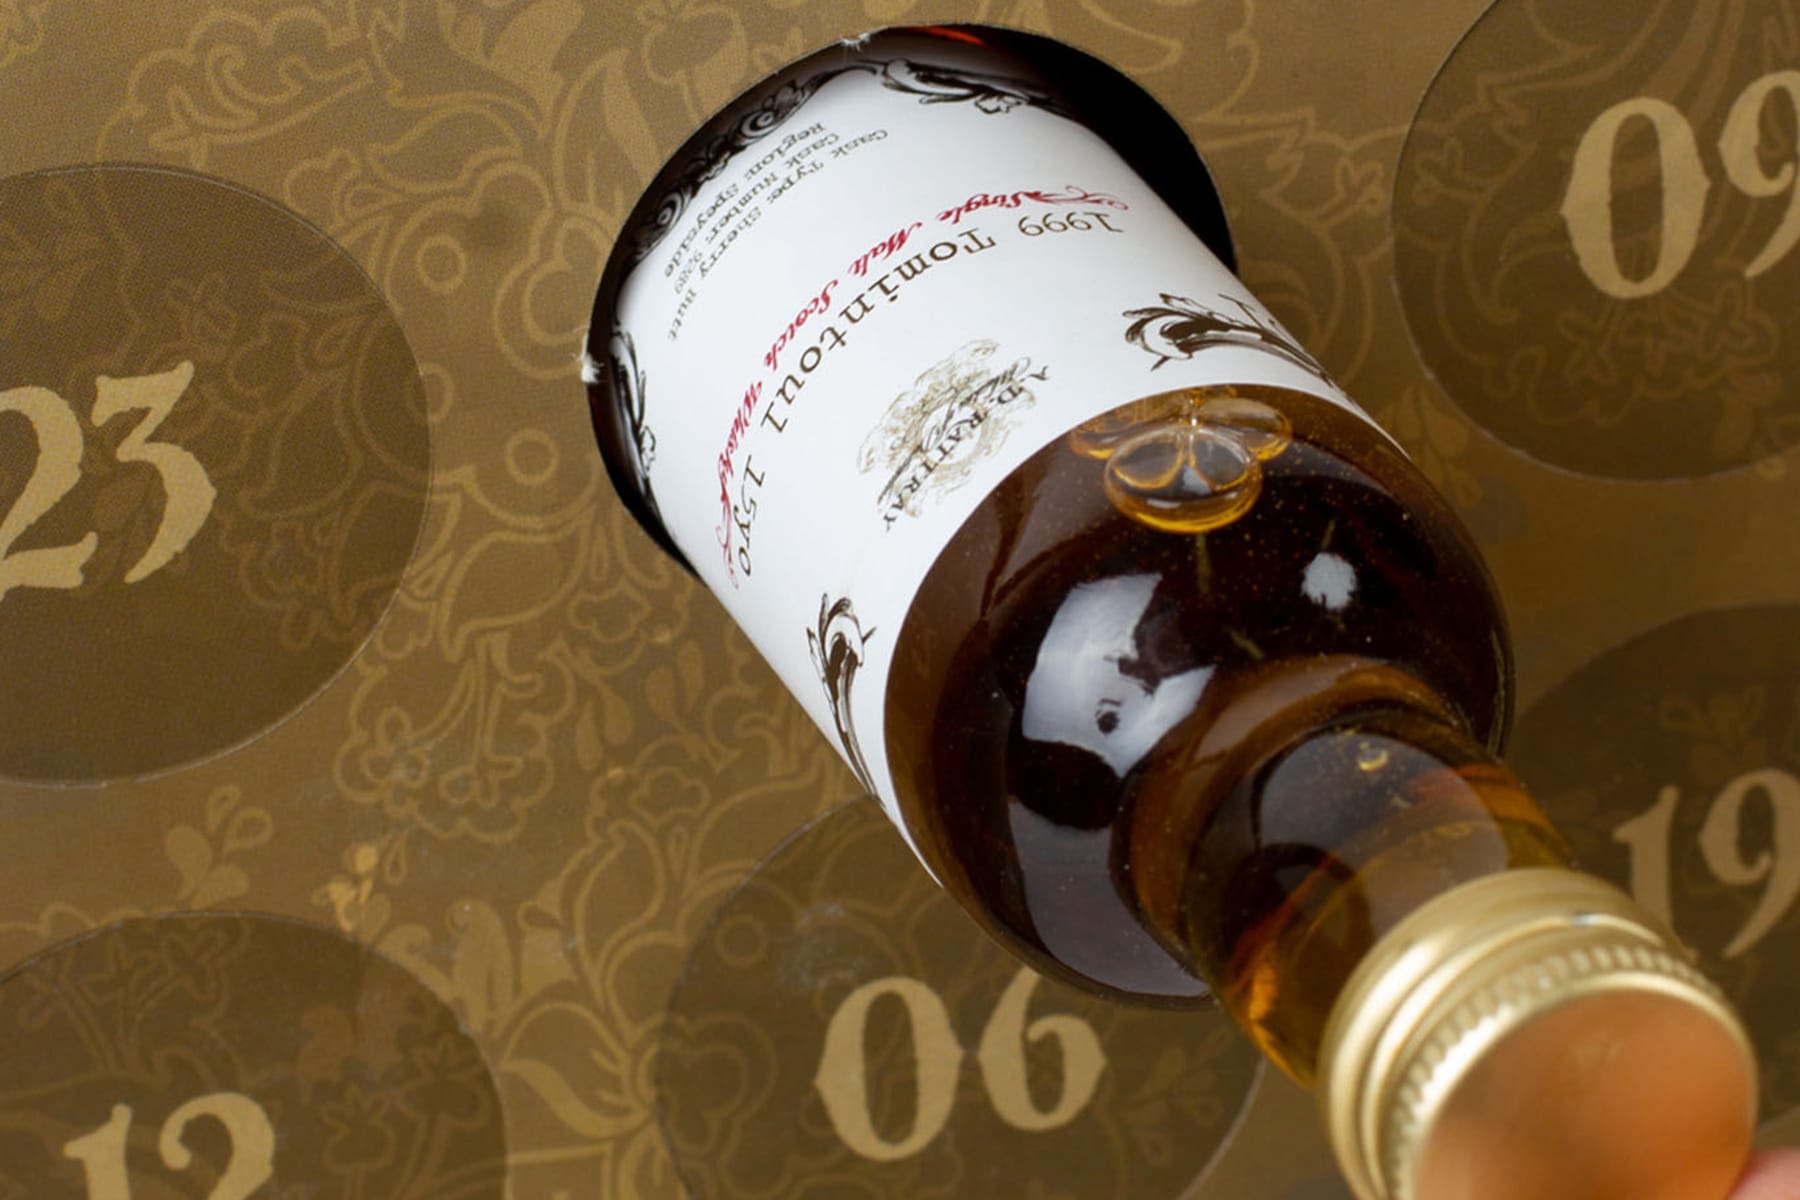 SPOILER ALERT: 5th Edition Premium Scotch Whisky Advent Calendar